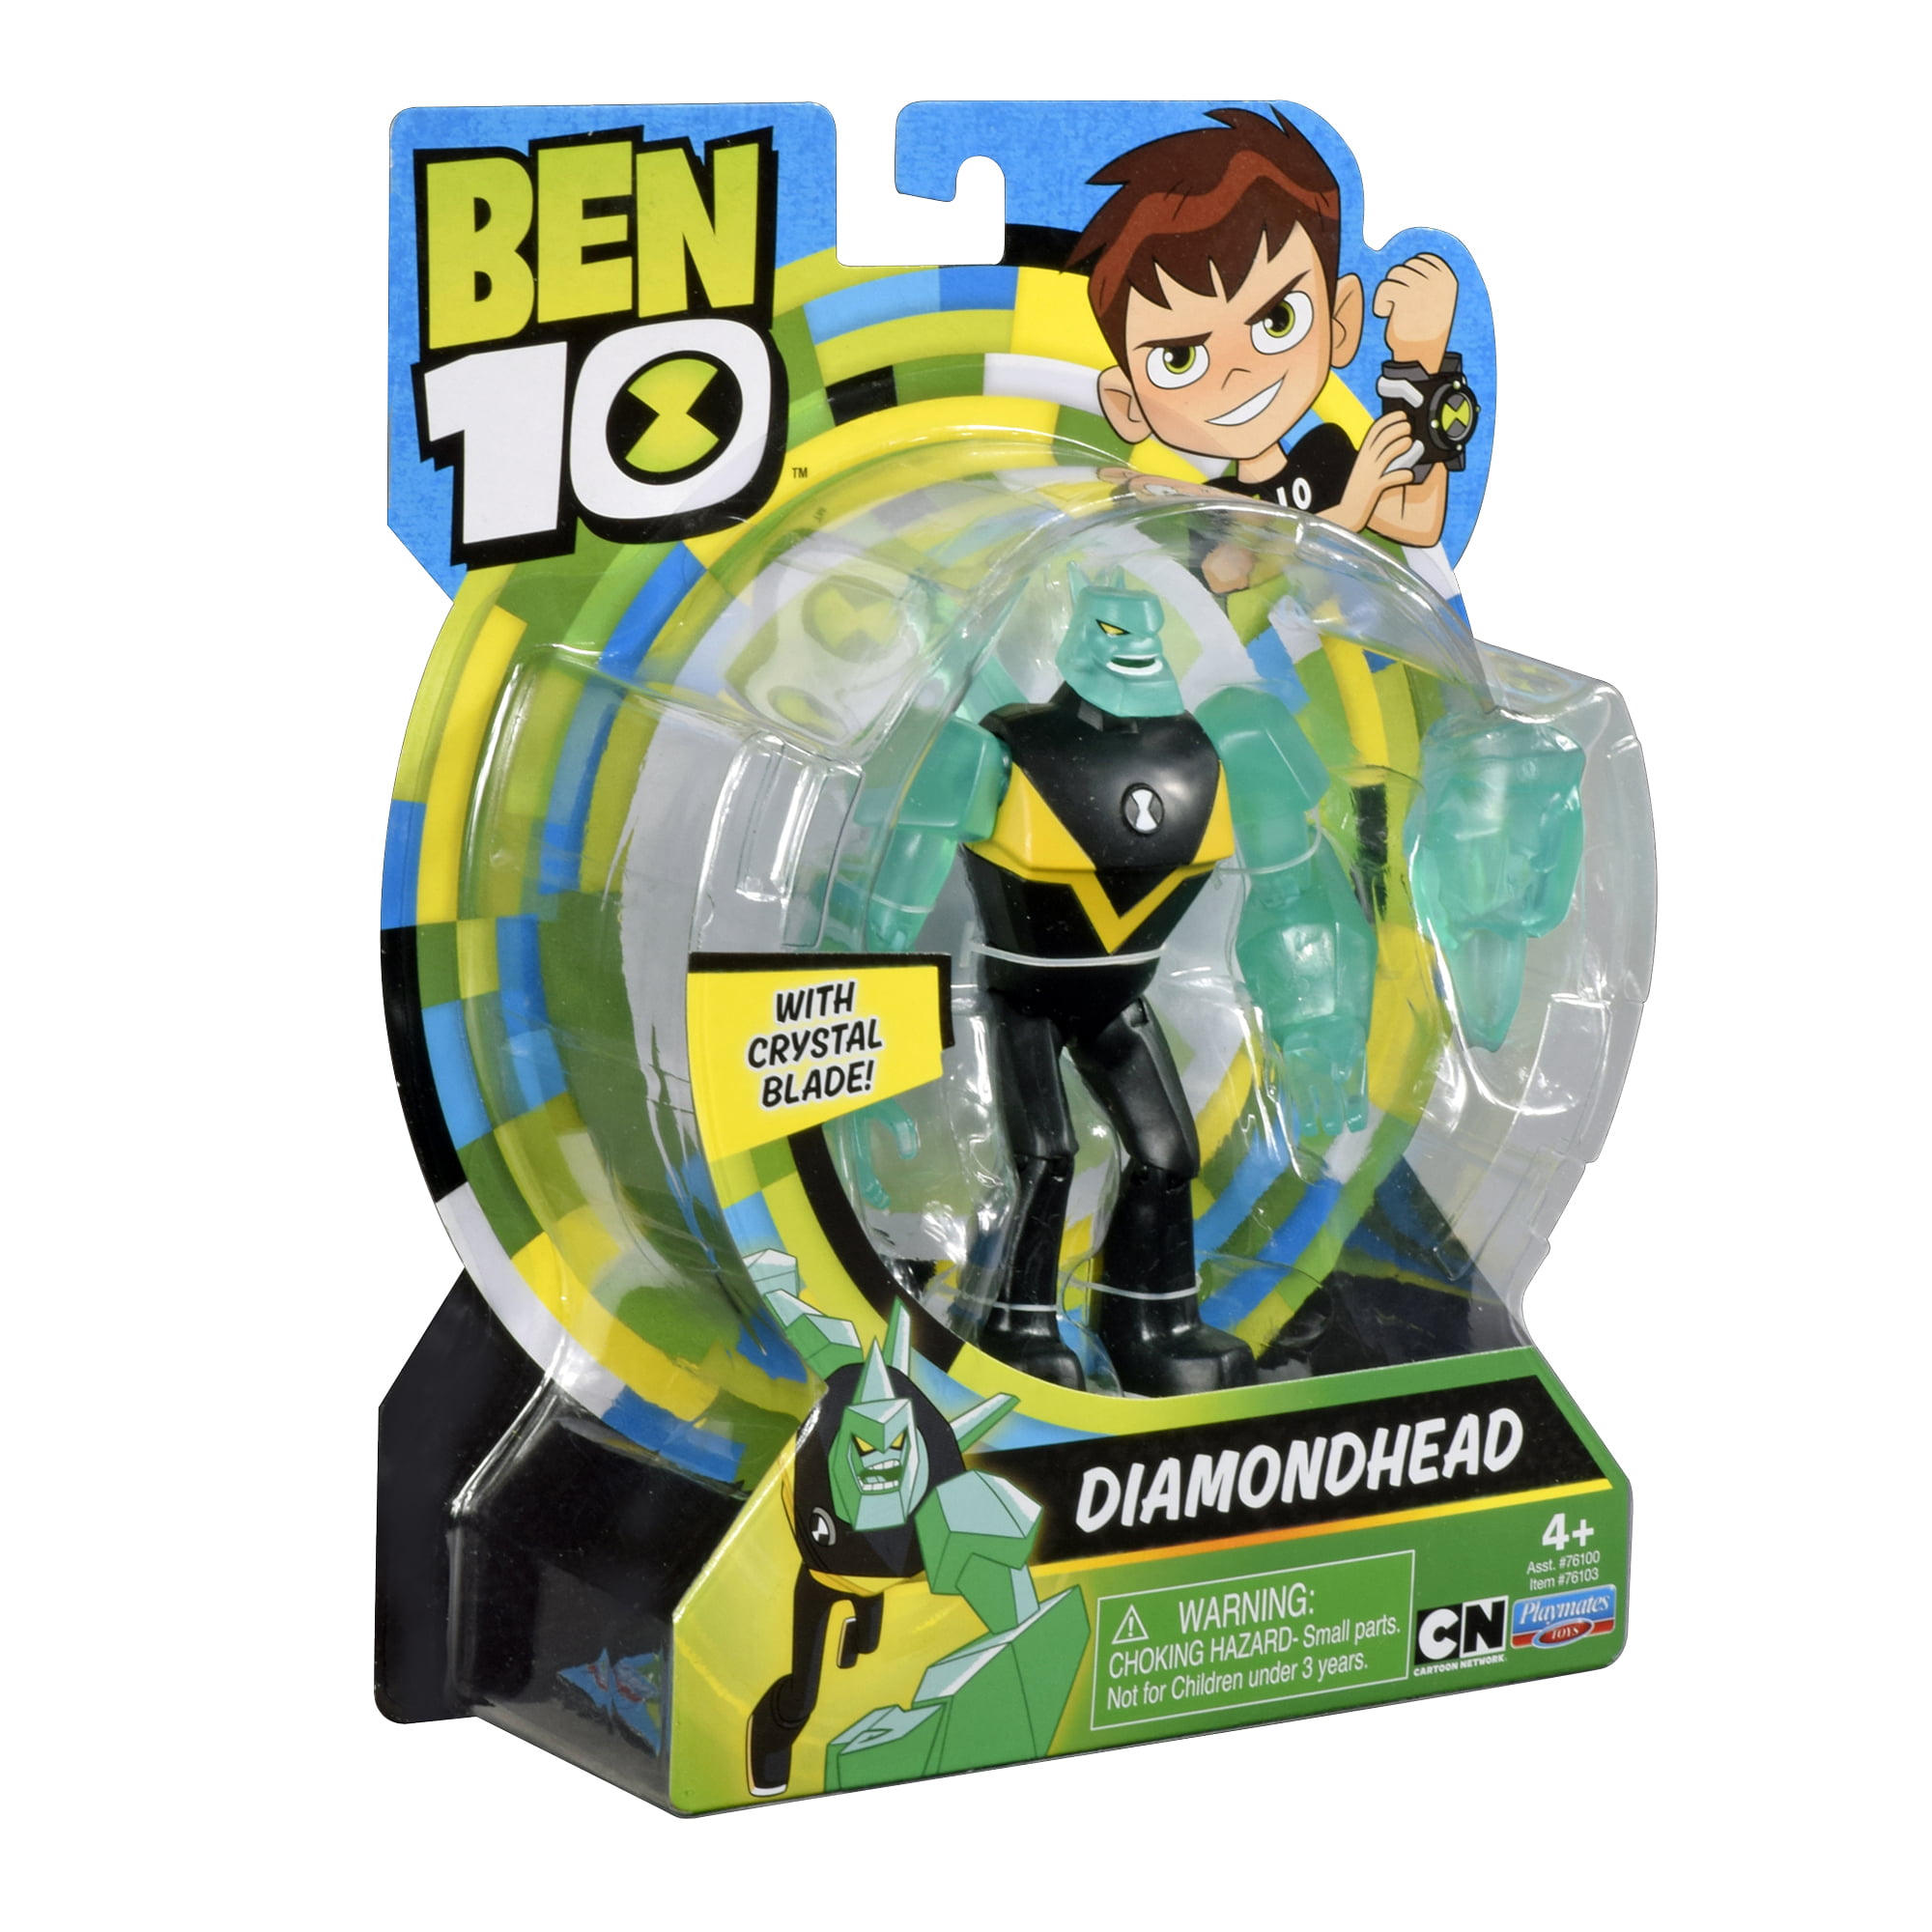 diamond head ben 10 toy